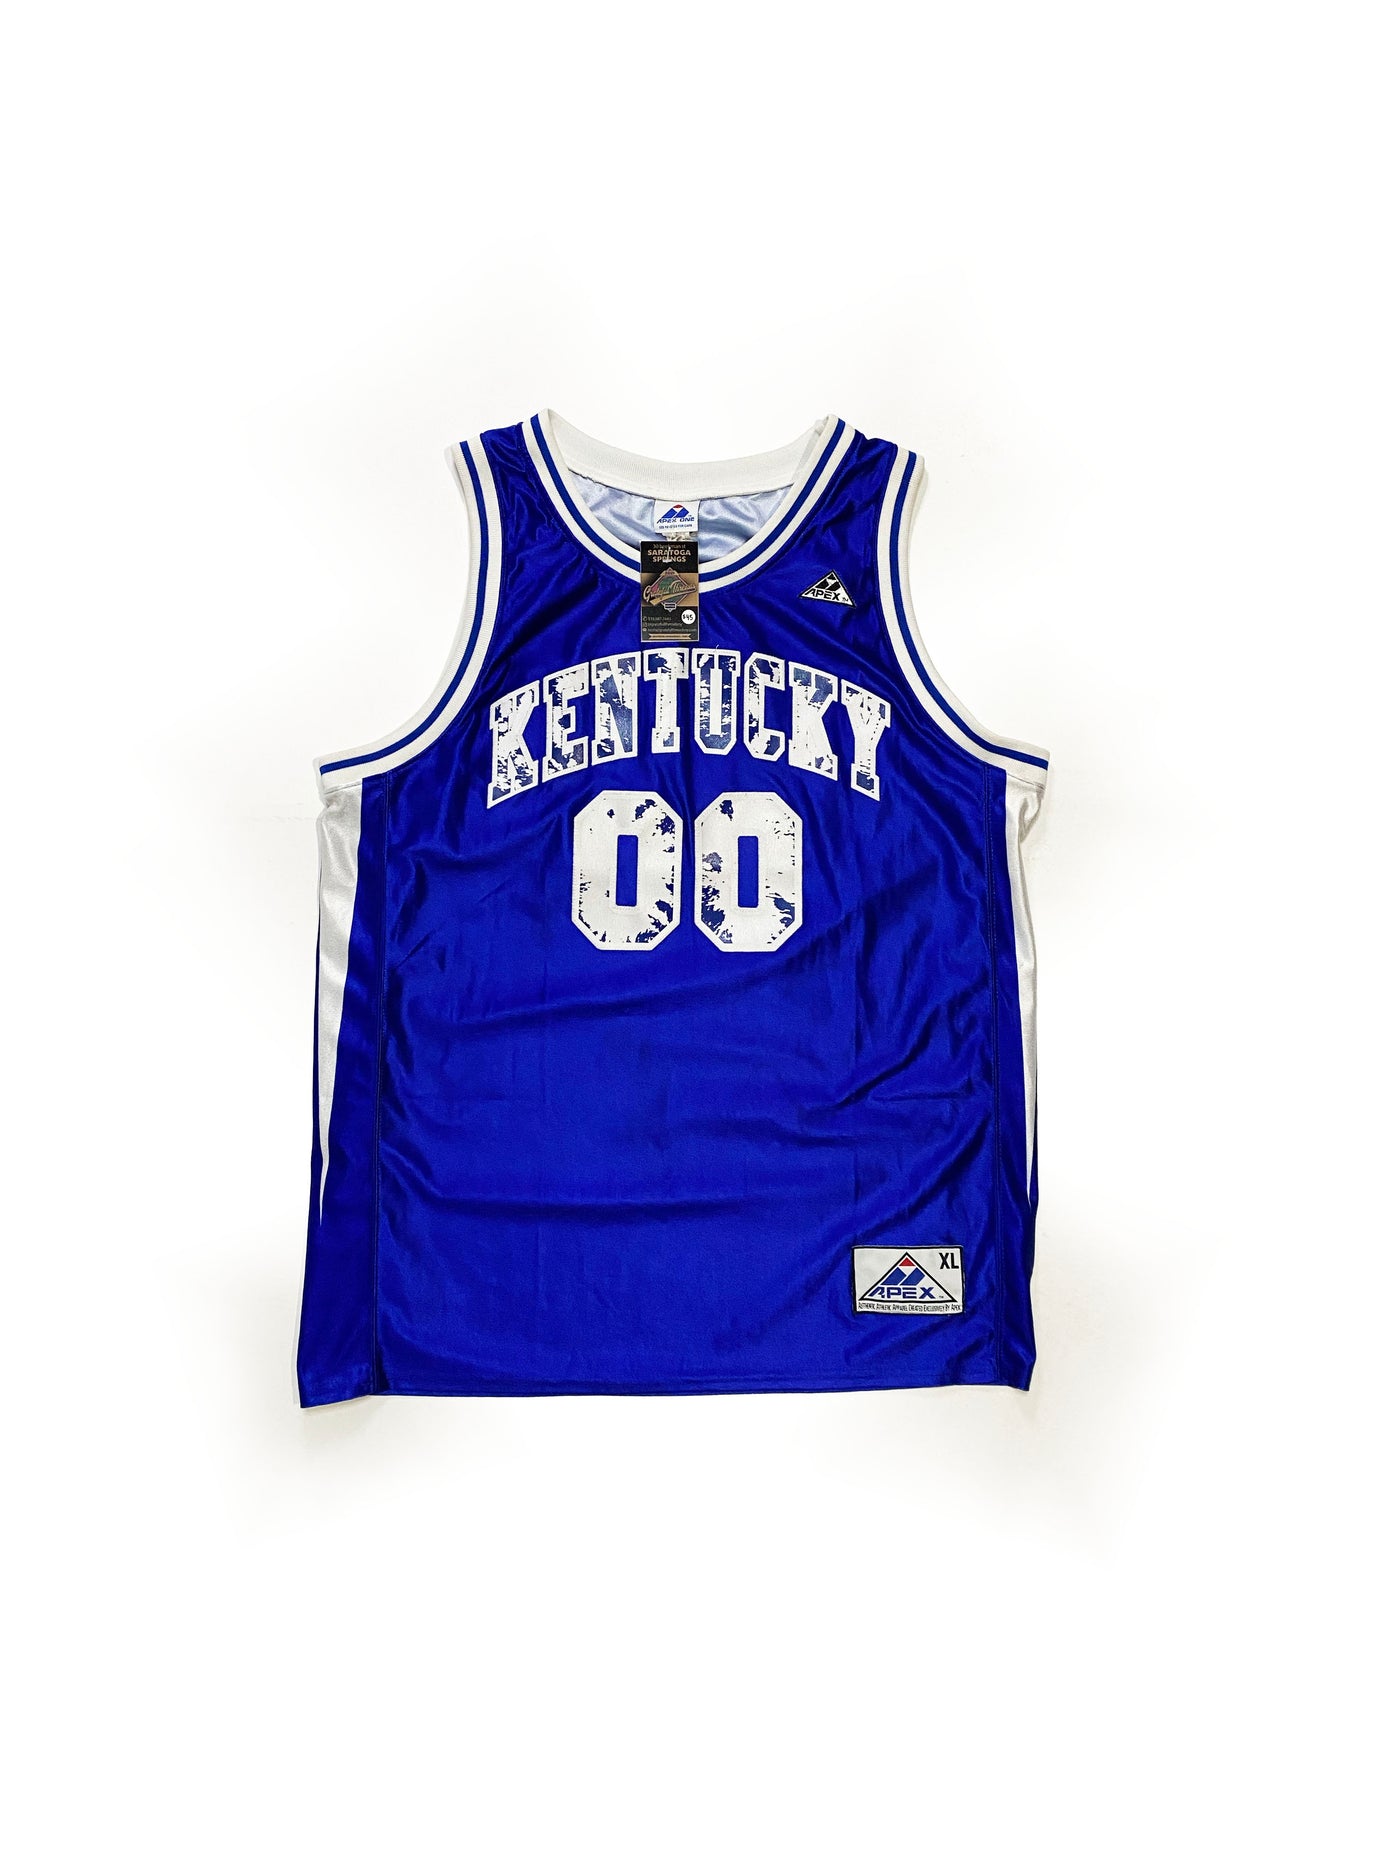 Vintage 90s Kentucky Basketball Jersey